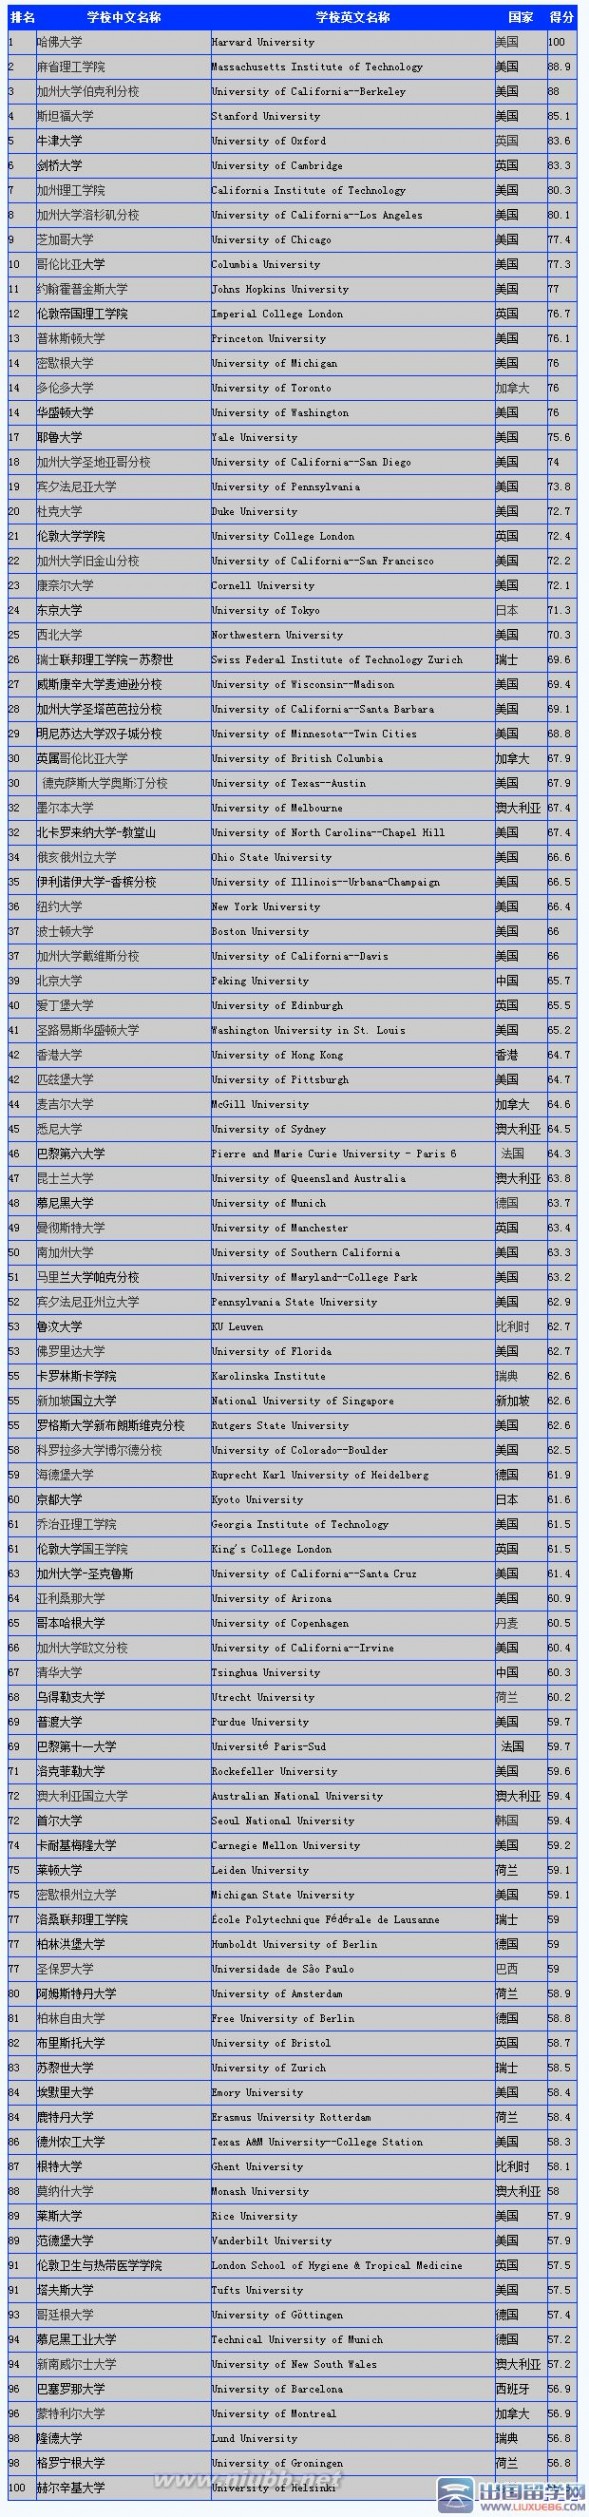 2015USNews世界大学排名Top500（完整名单）_usnews世界大学排名